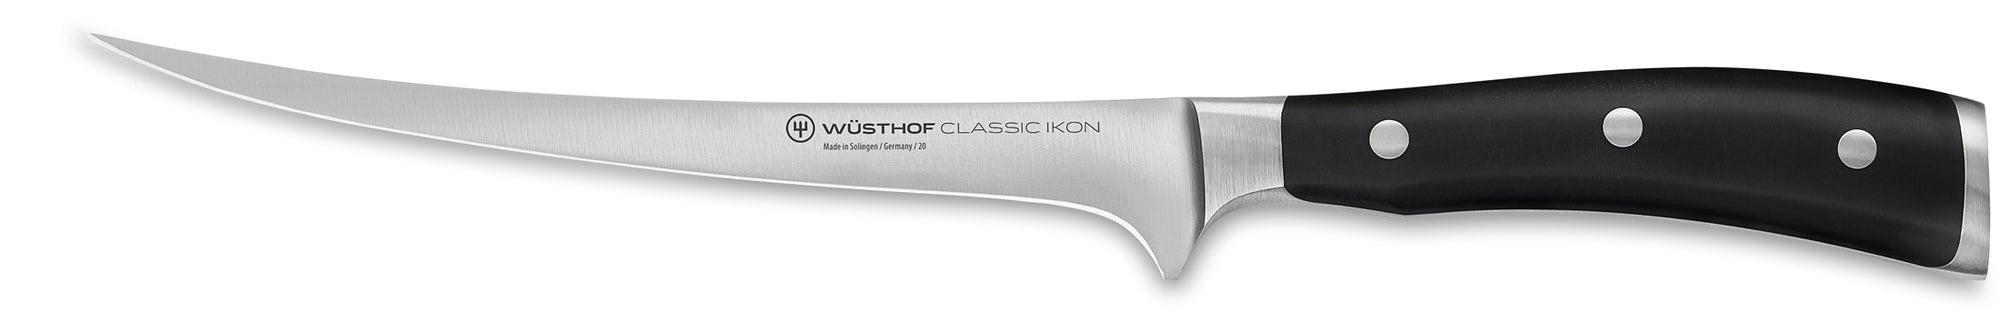 Wusthof Canada Classic IKON Fillet Knife, 7-inch (18cm) - 4626-18